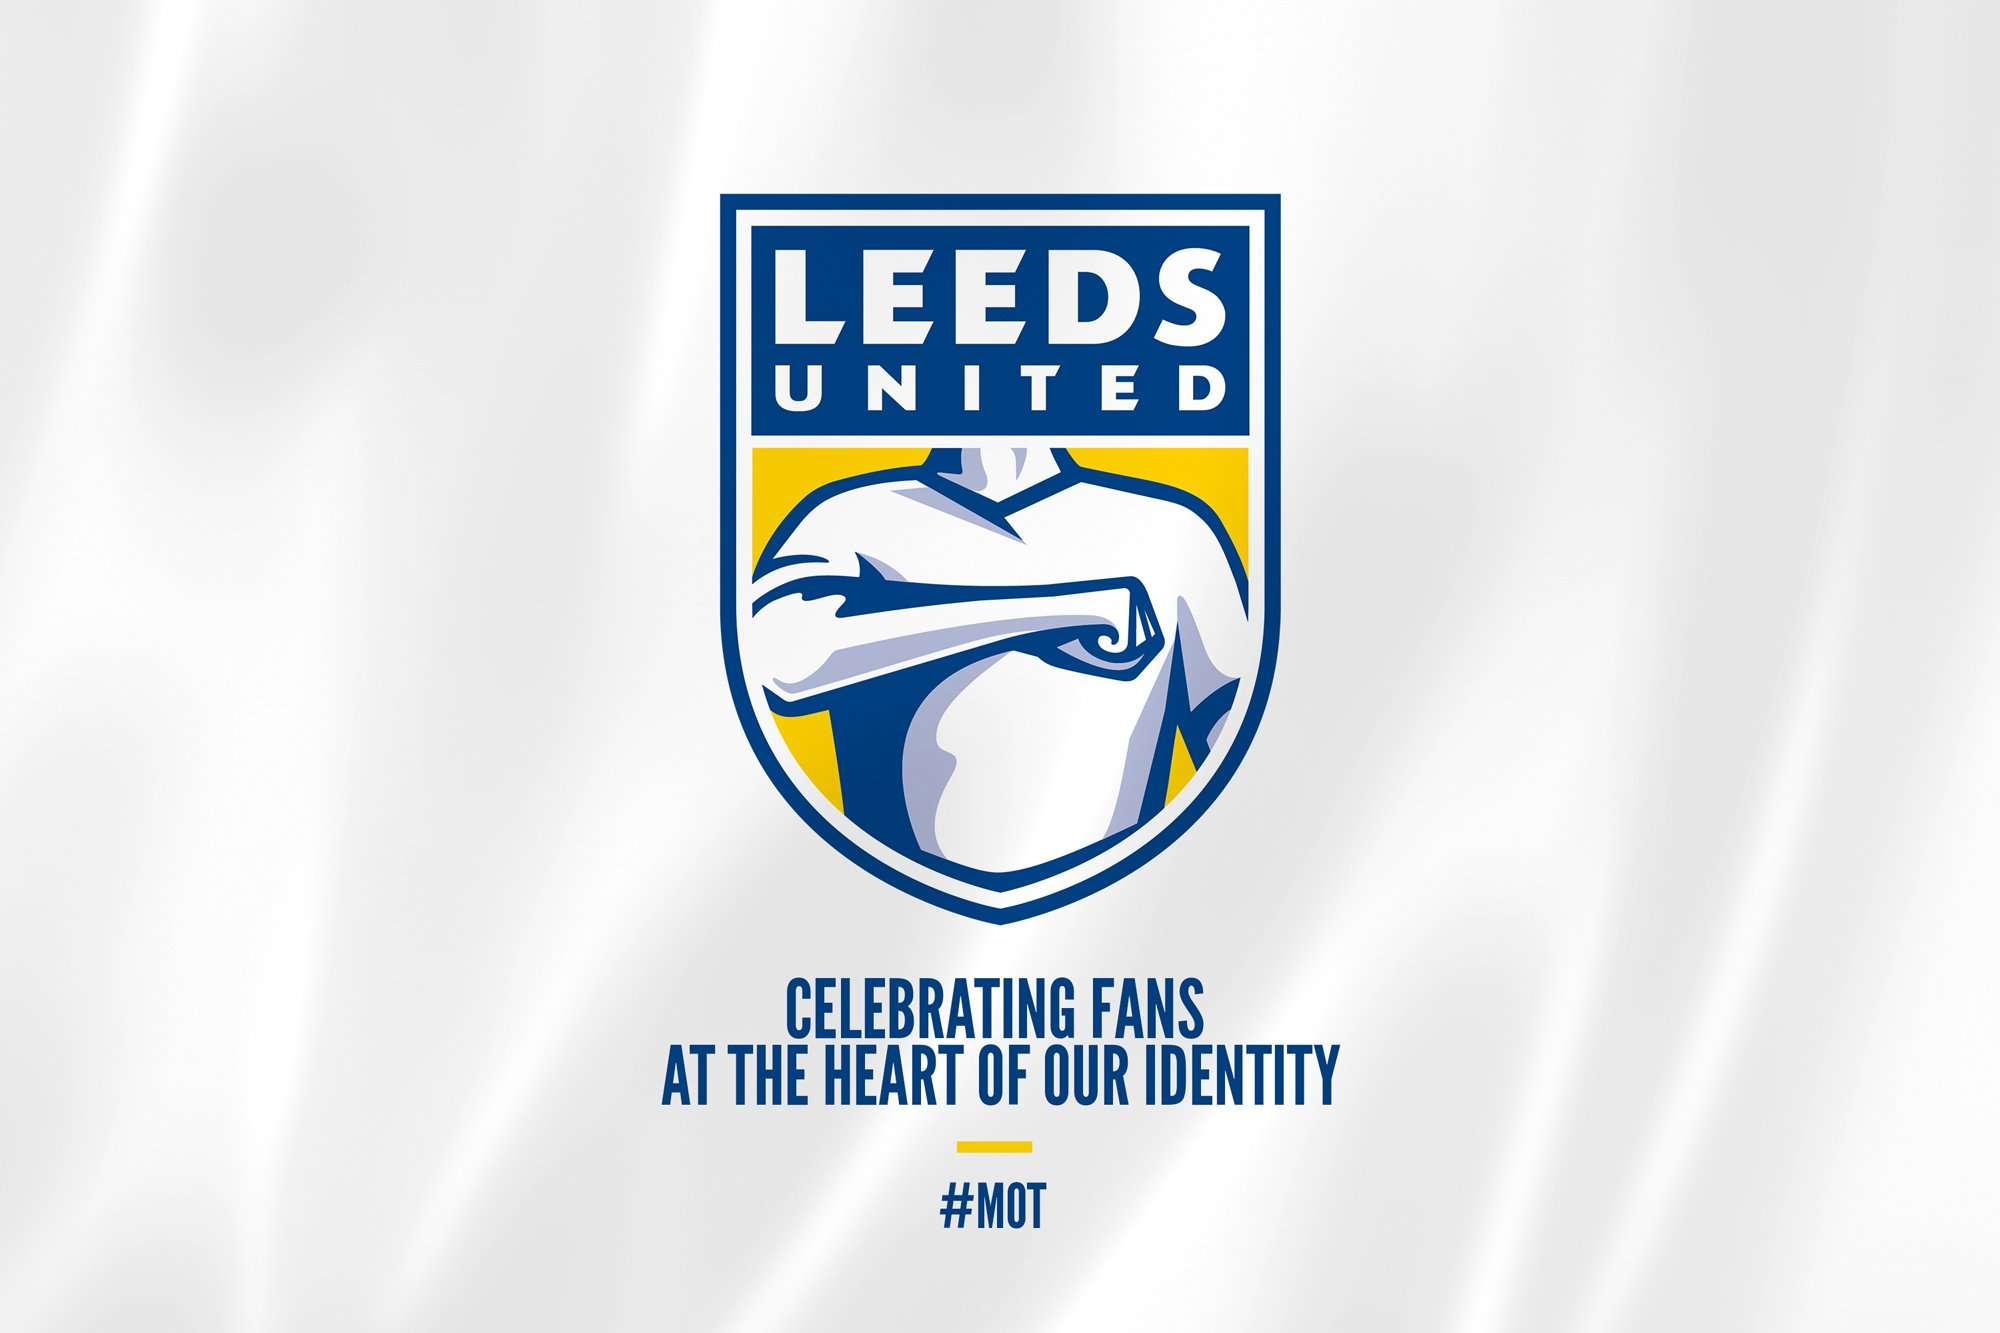 Leeds United new crest